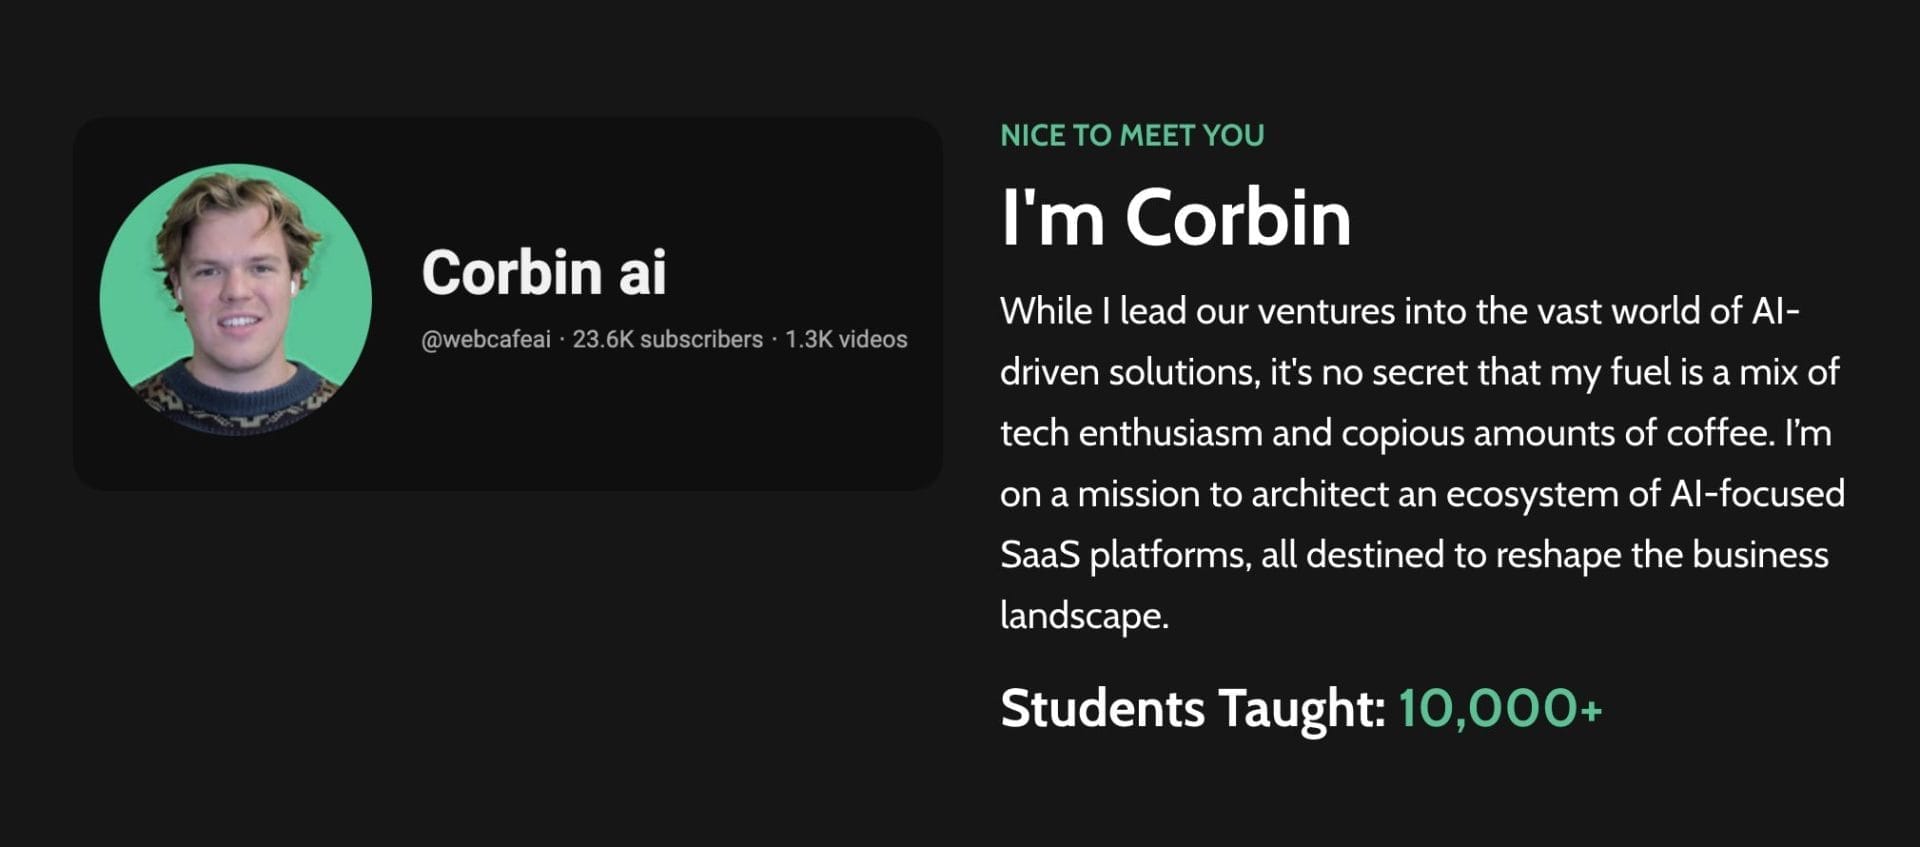 Corbin ai – Start a Successful AI Automation Agency